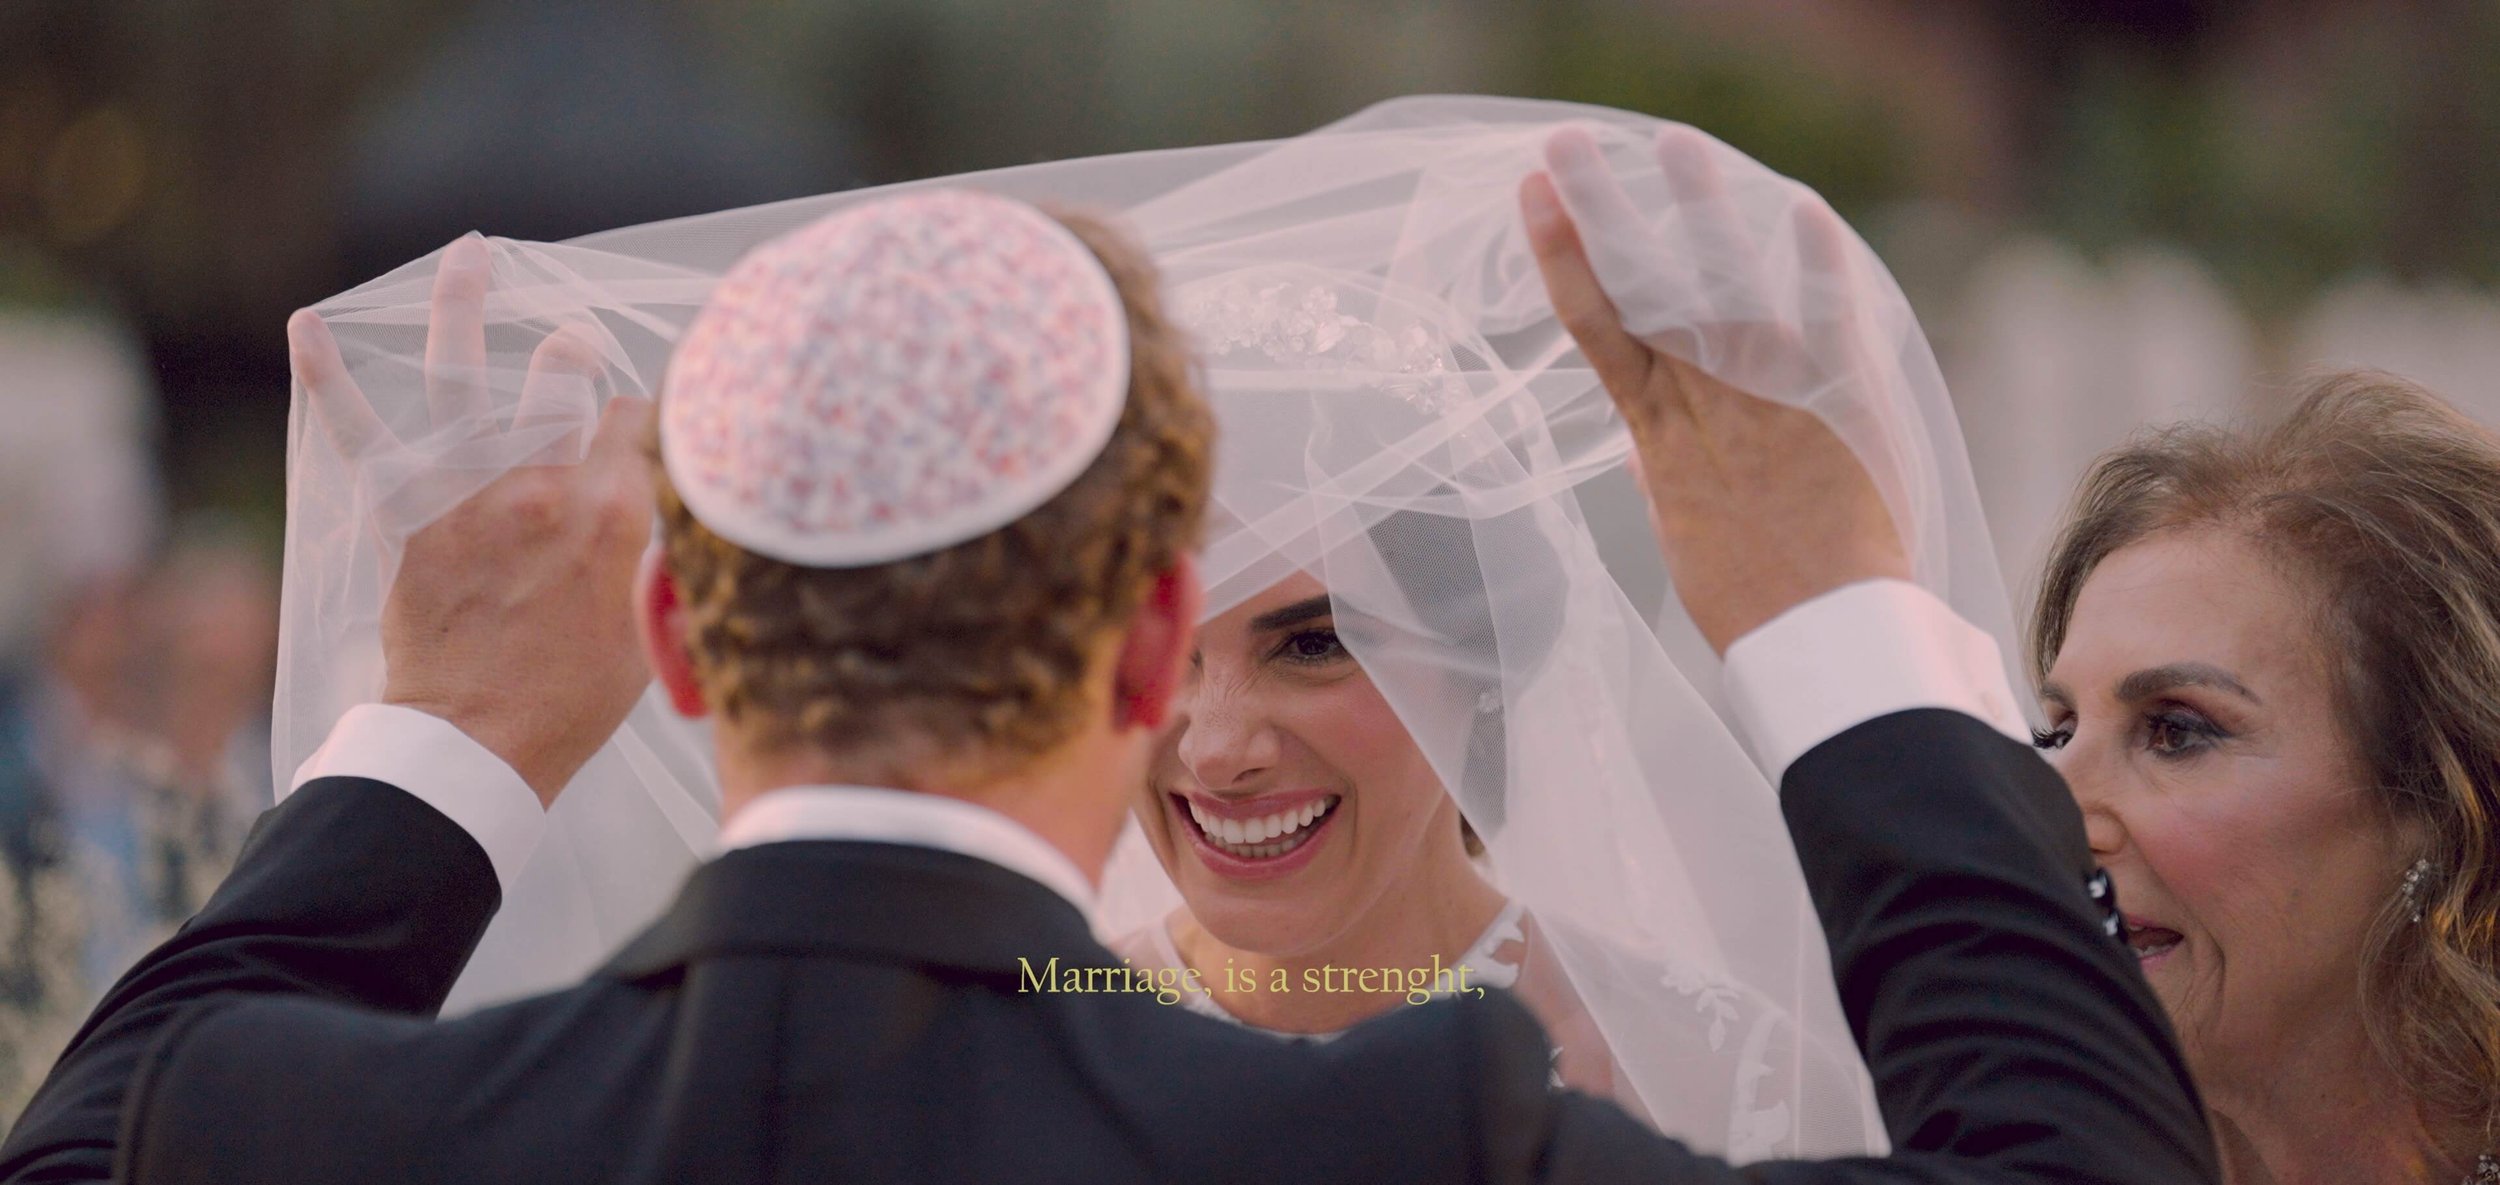 Alexandra & Raph - Wedding Film Highlight.mov_snapshot_02.55.362.jpg